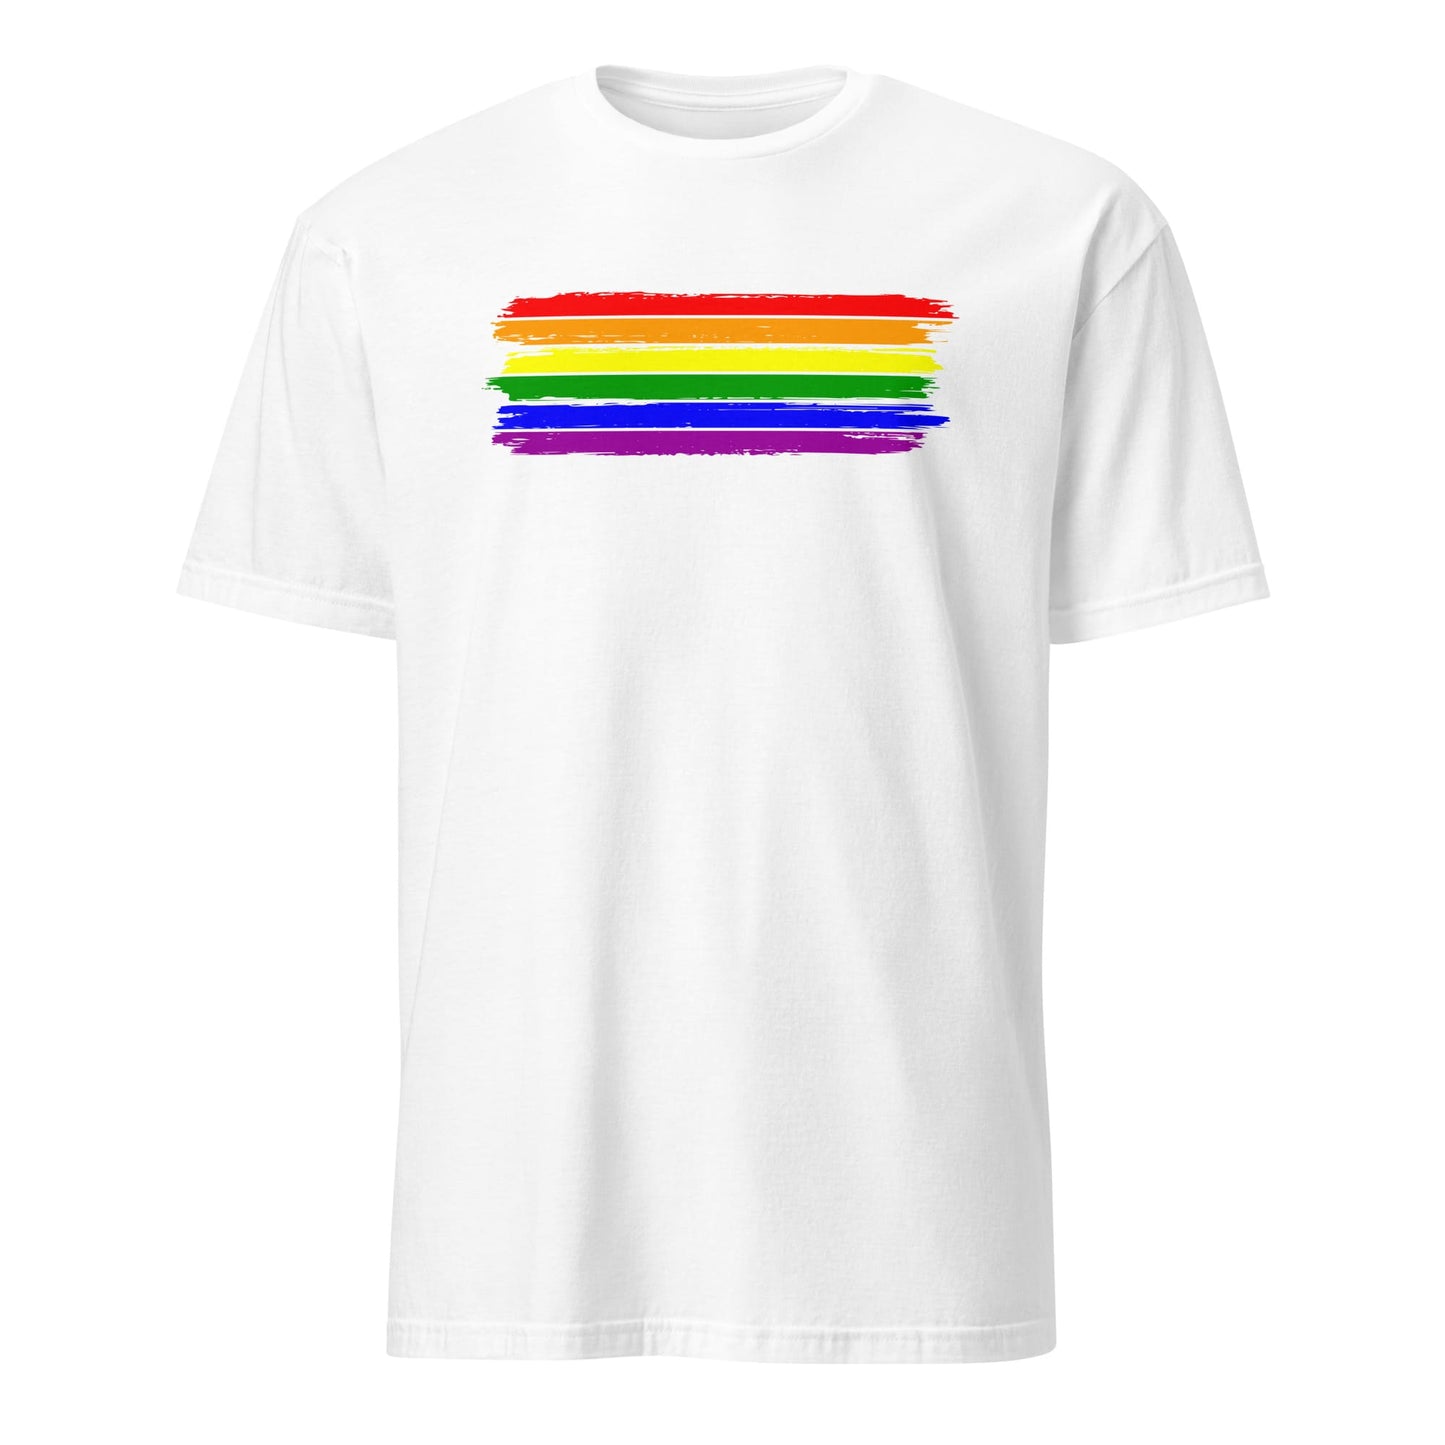 LGBT shirt, grunge rainbow flag tee, white